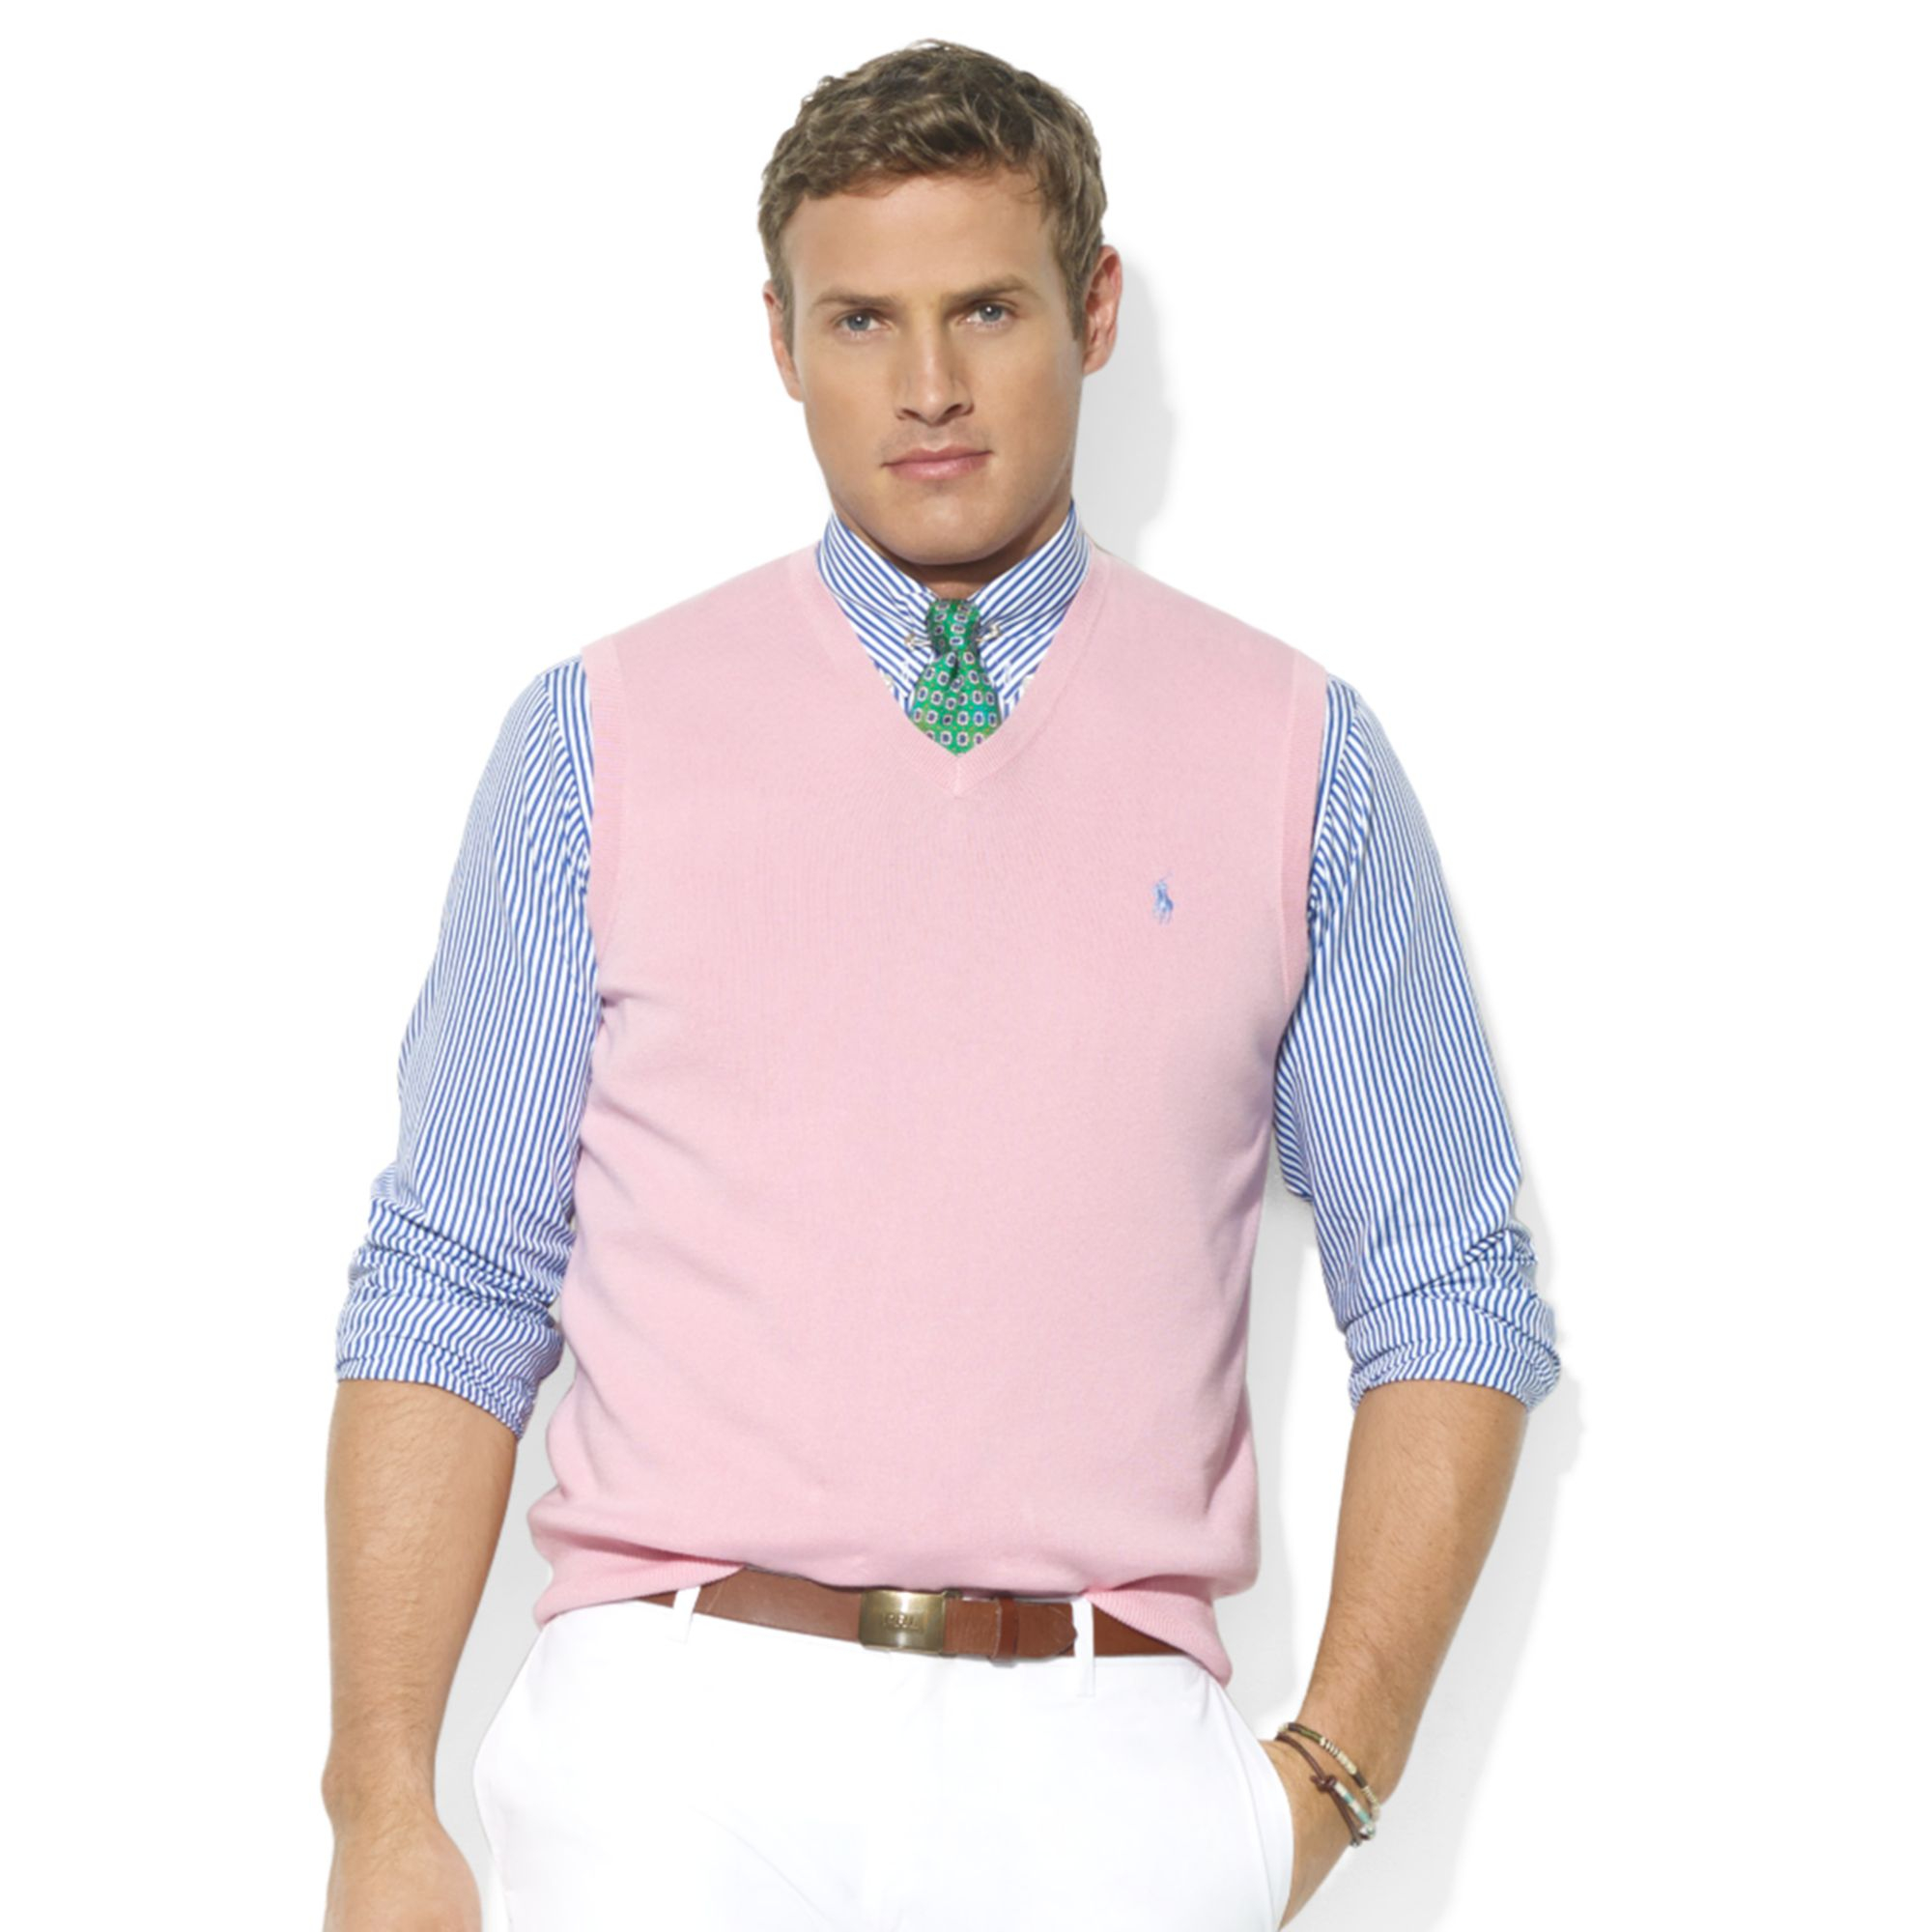 Ralph Lauren V-Neck Pima Cotton Sweater Vest in Pink for Men - Lyst